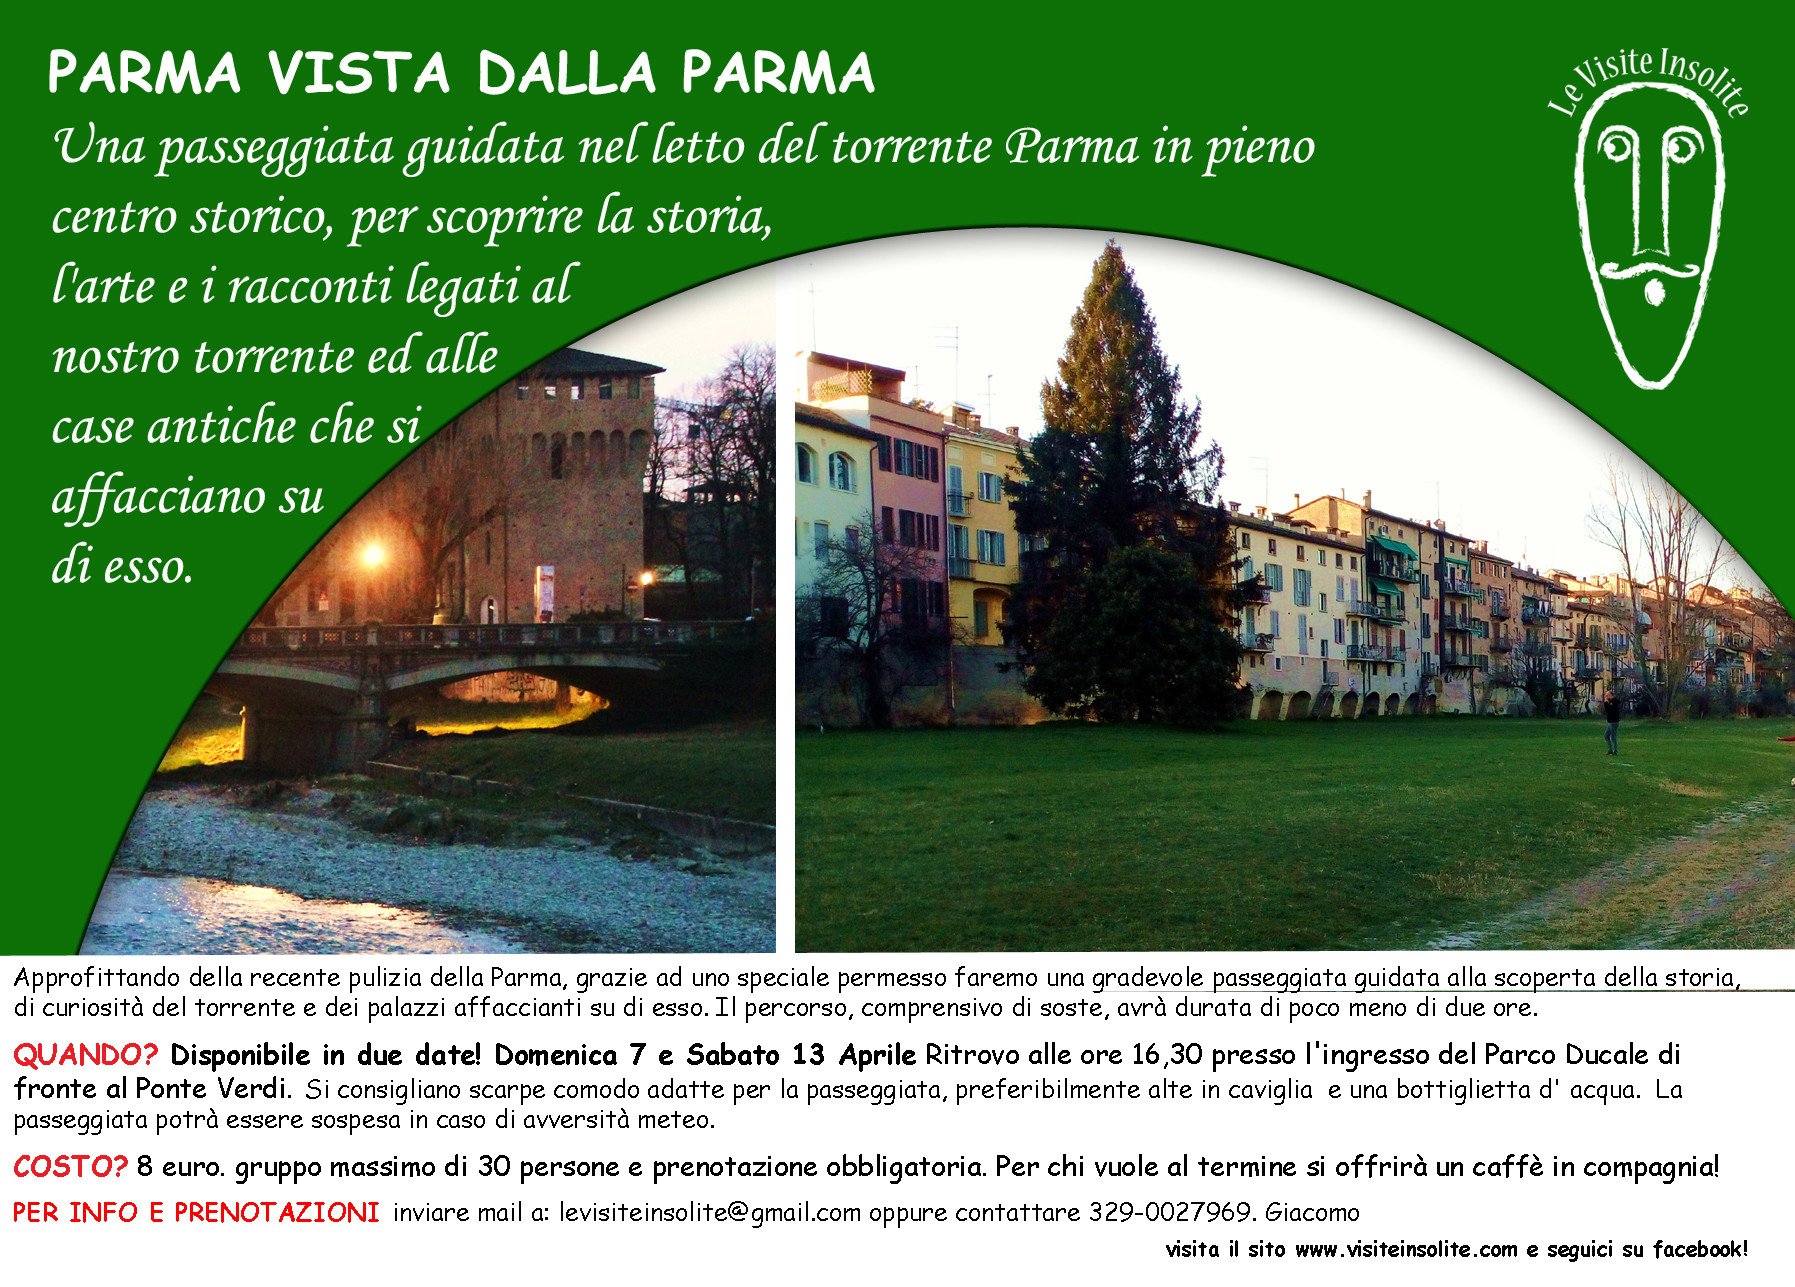 Le visite insolite: Parma vista dalla Parma"